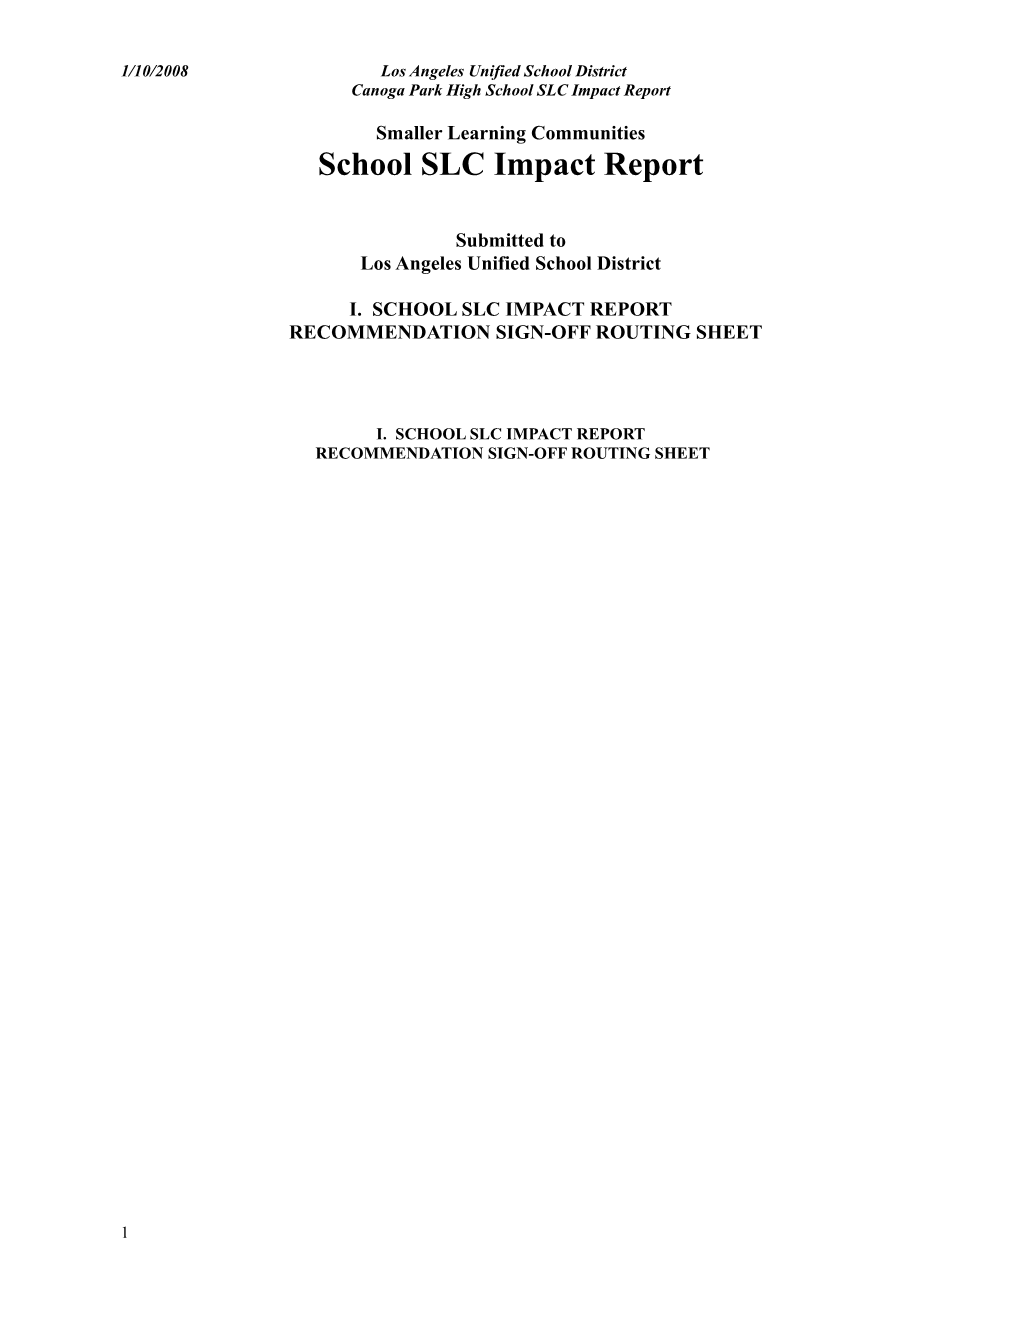 Canoga Park High School SLC Impact Report